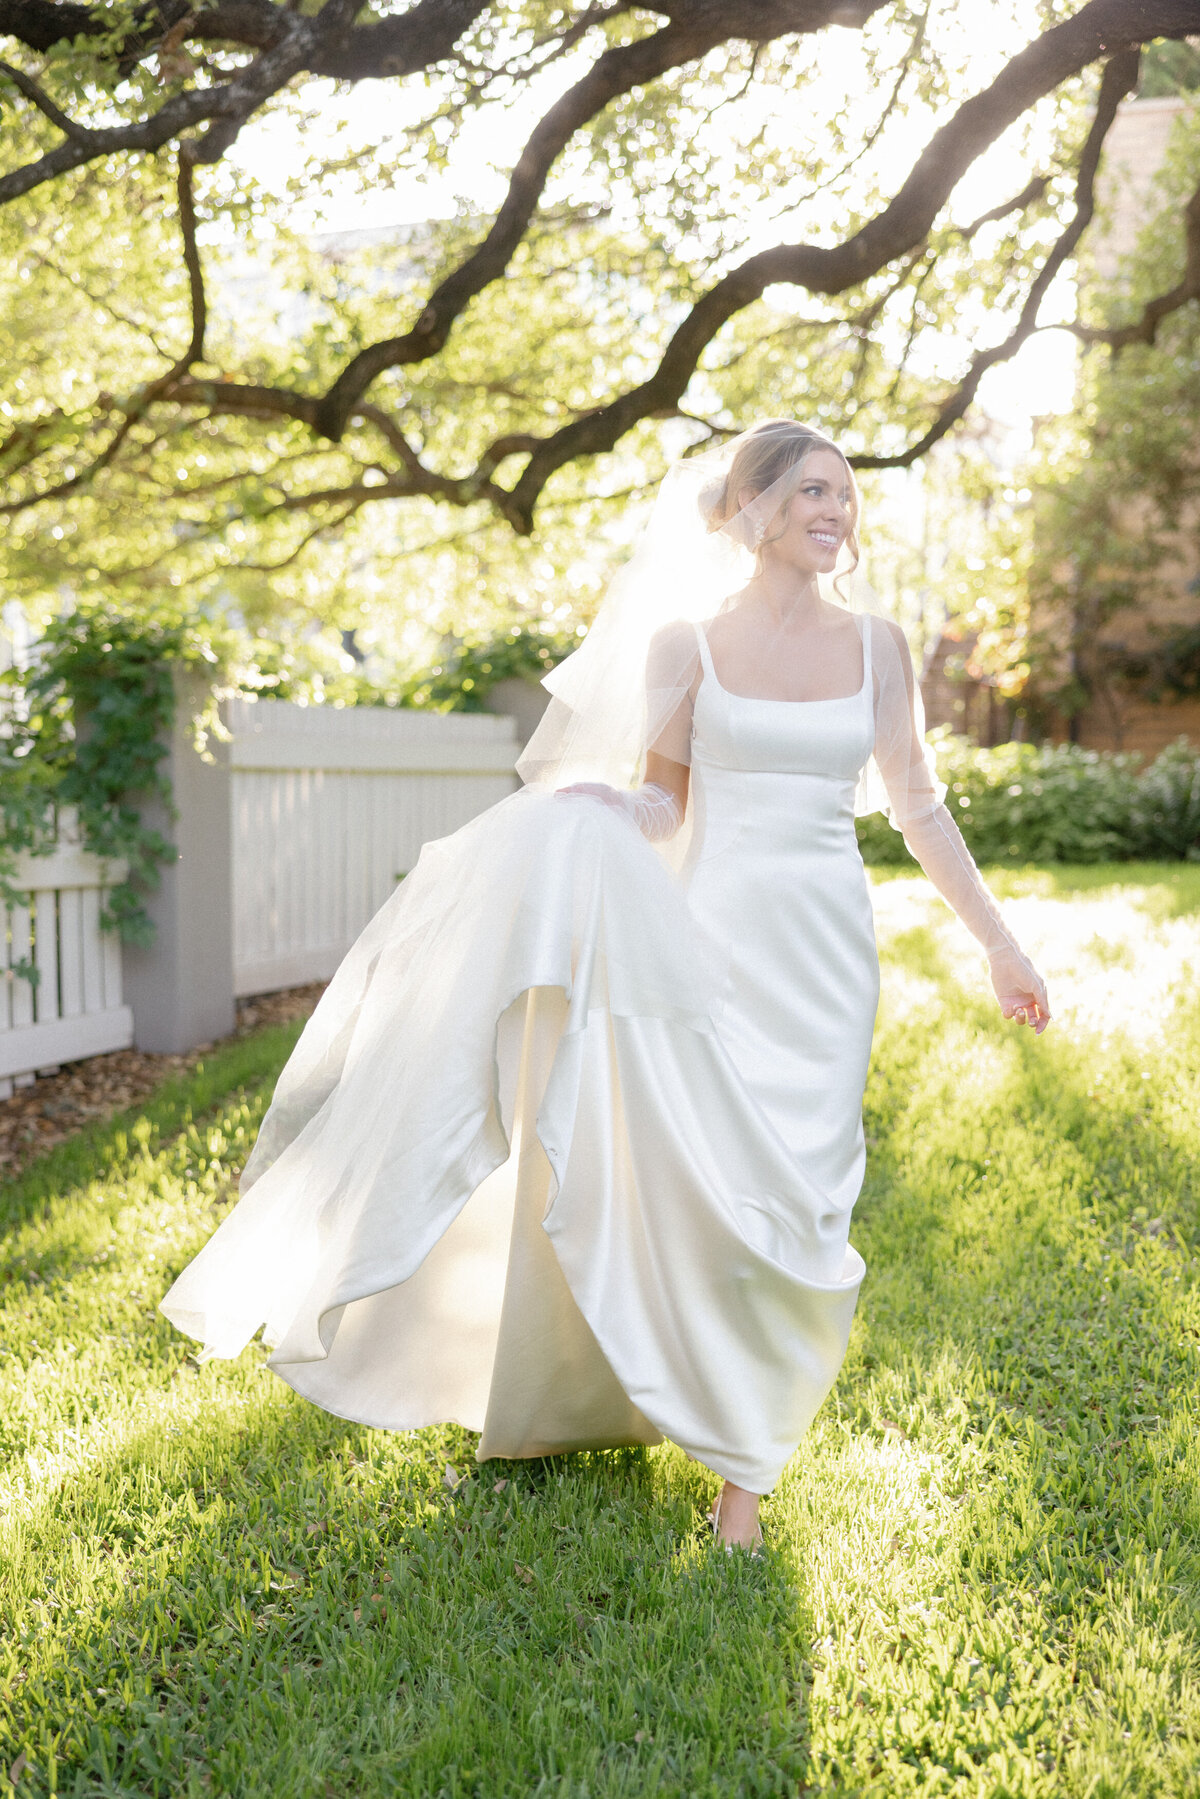 bride in Ines di Santo wedding dress walking in grass